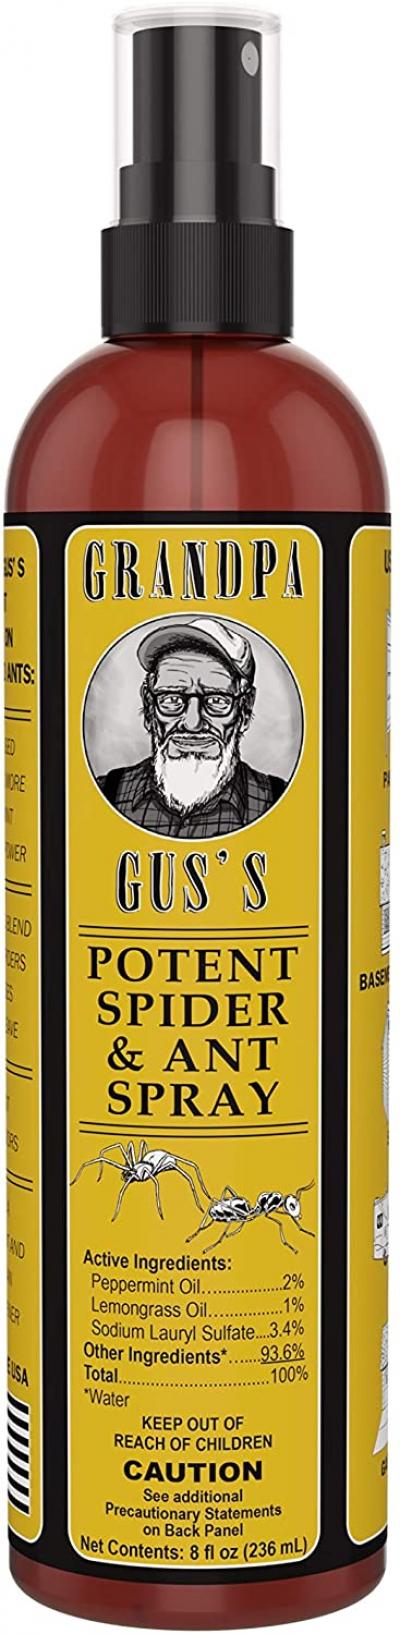 Grandpa Gus's Potent Spider & Ant Spray 8oz.